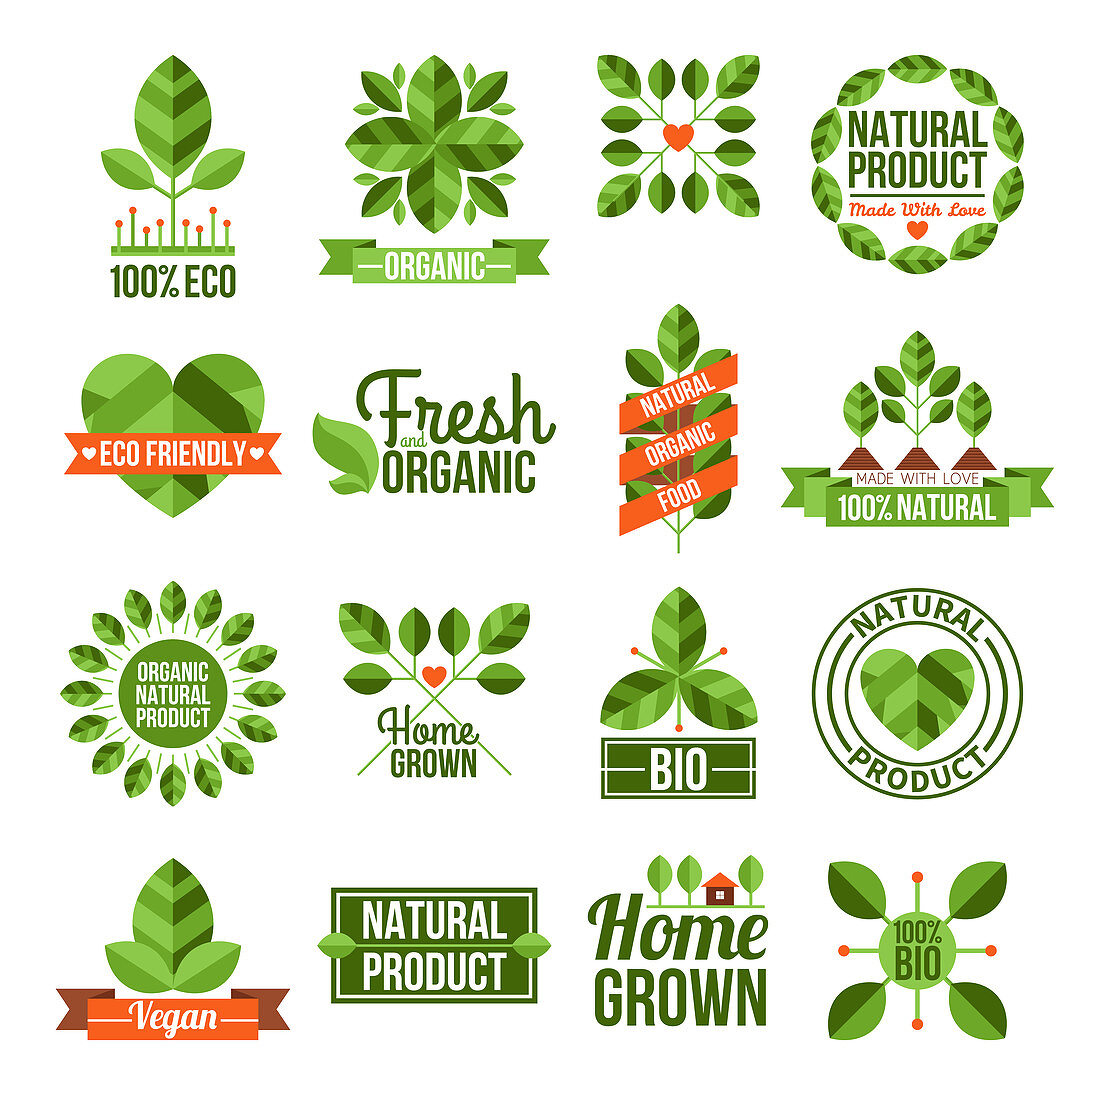 Organic and natural food labels, illustration